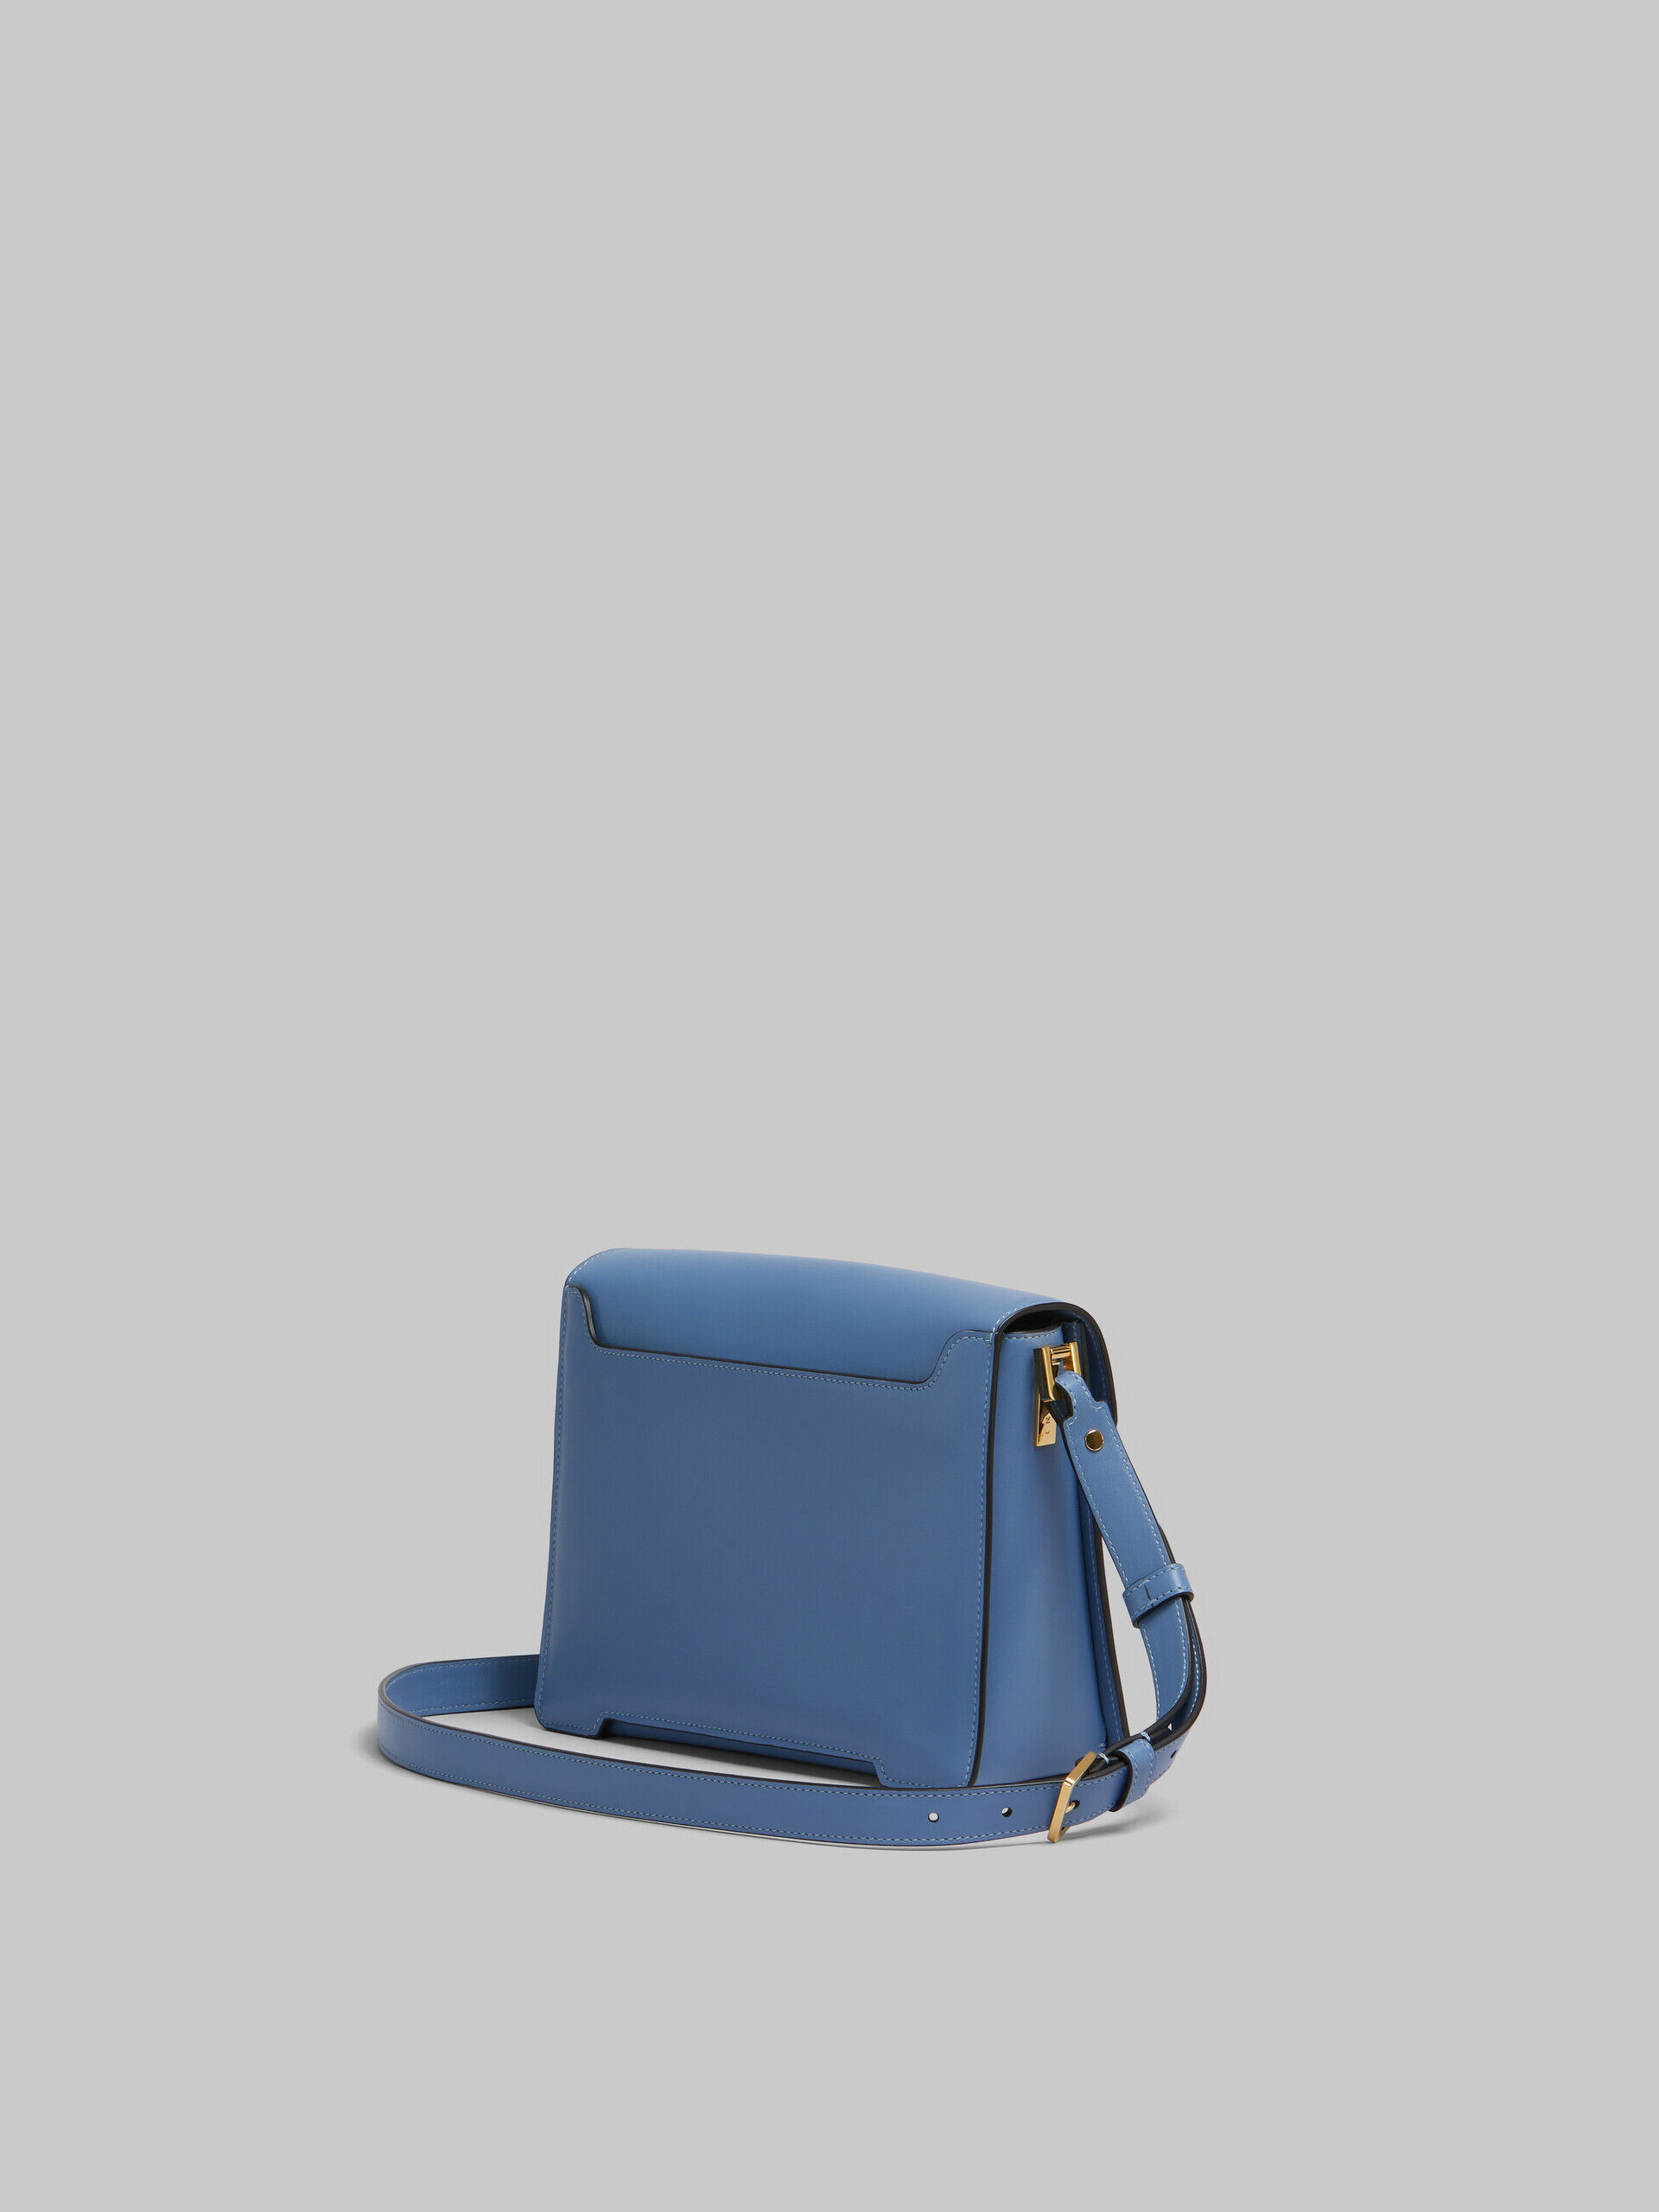 Blue leather Trunkaroo medium shoulder bag | Marni